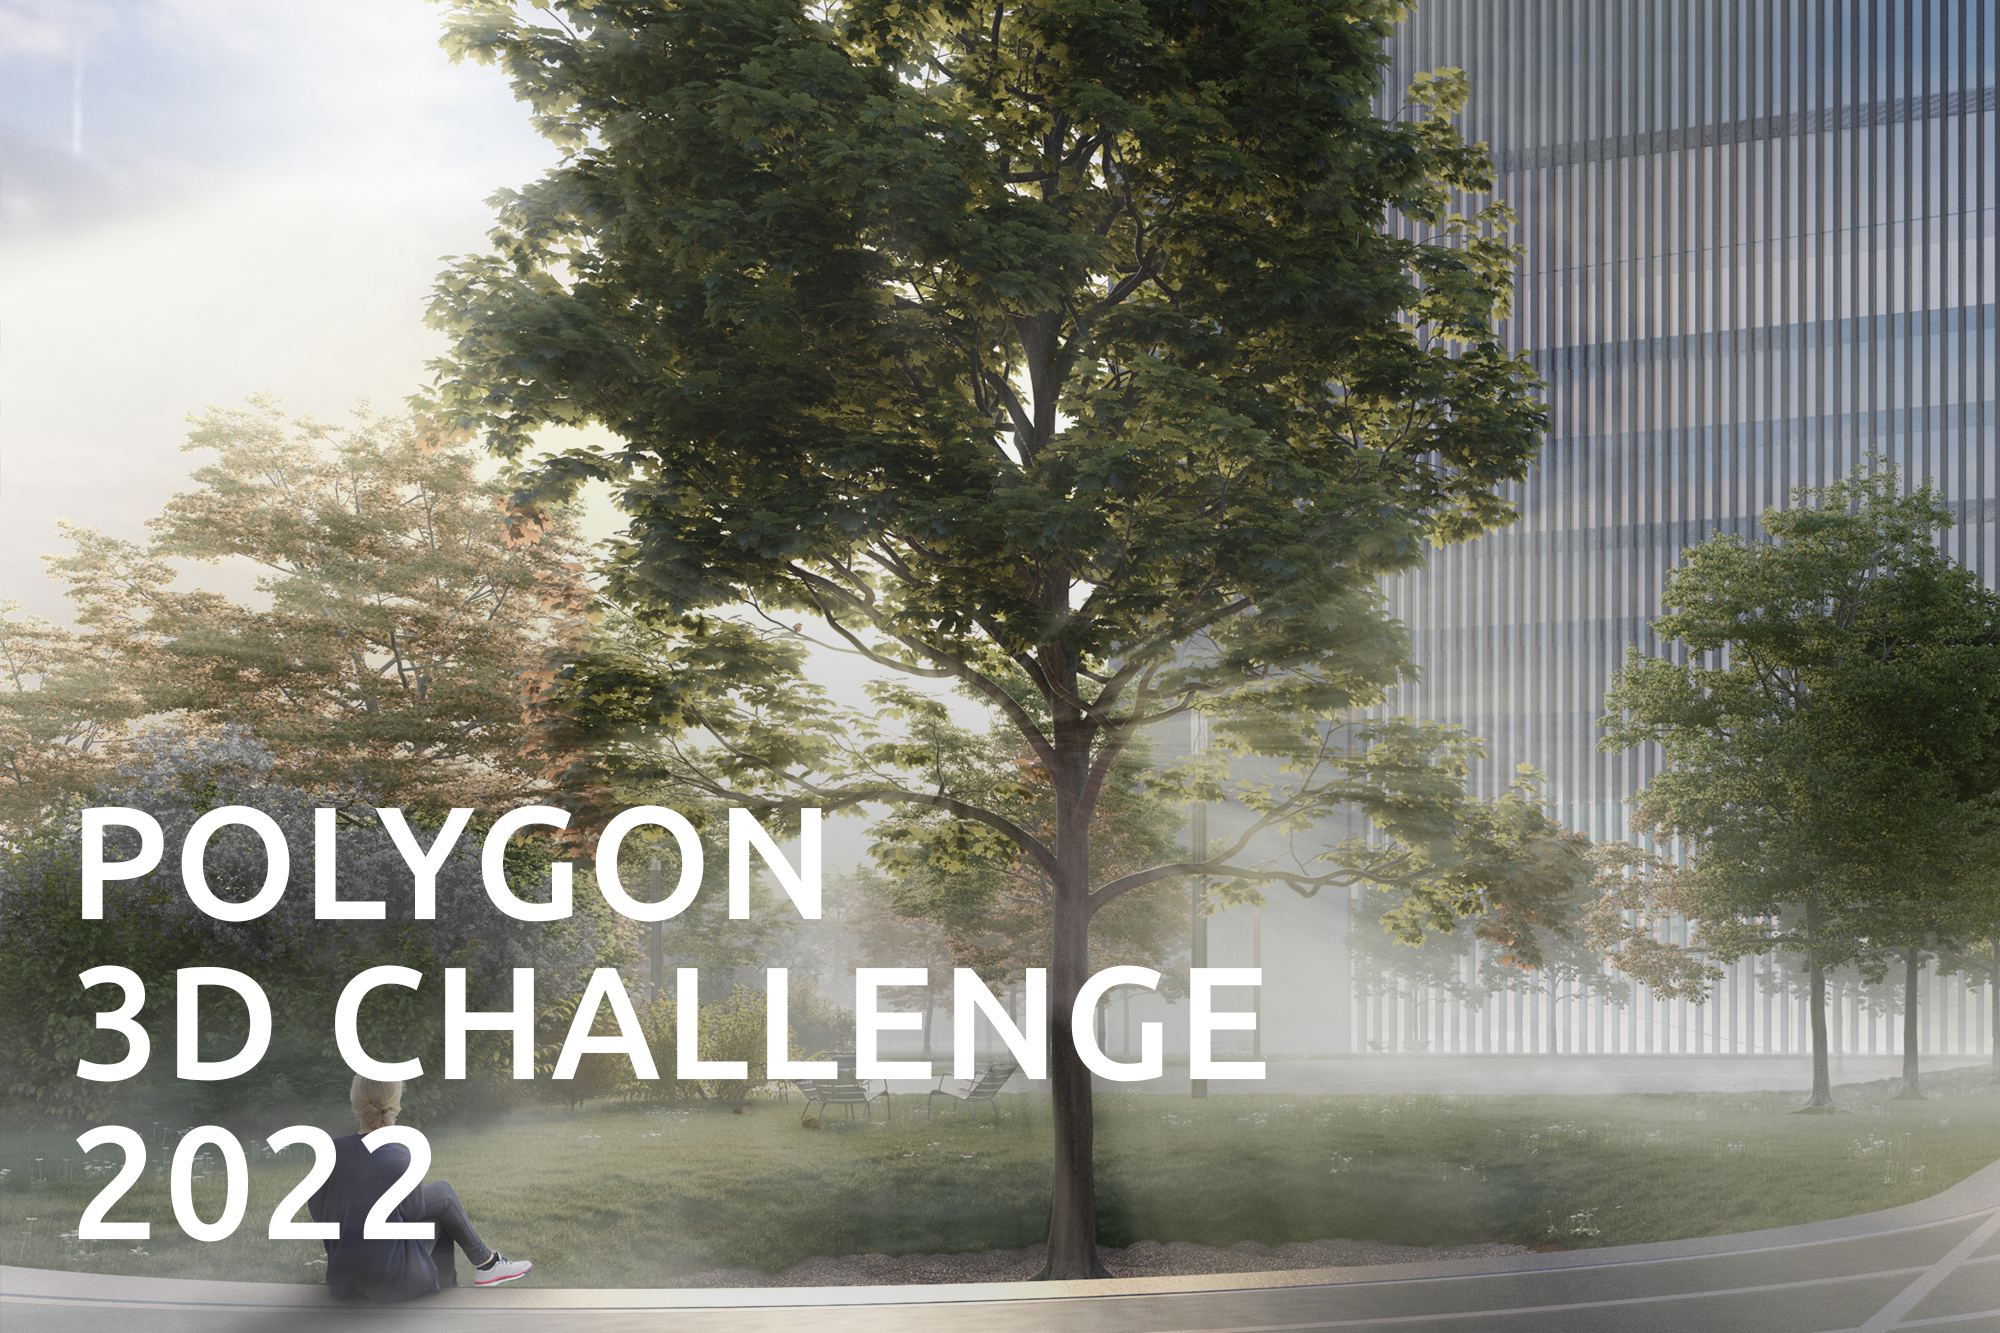 Polygon 3D Challenge 2022